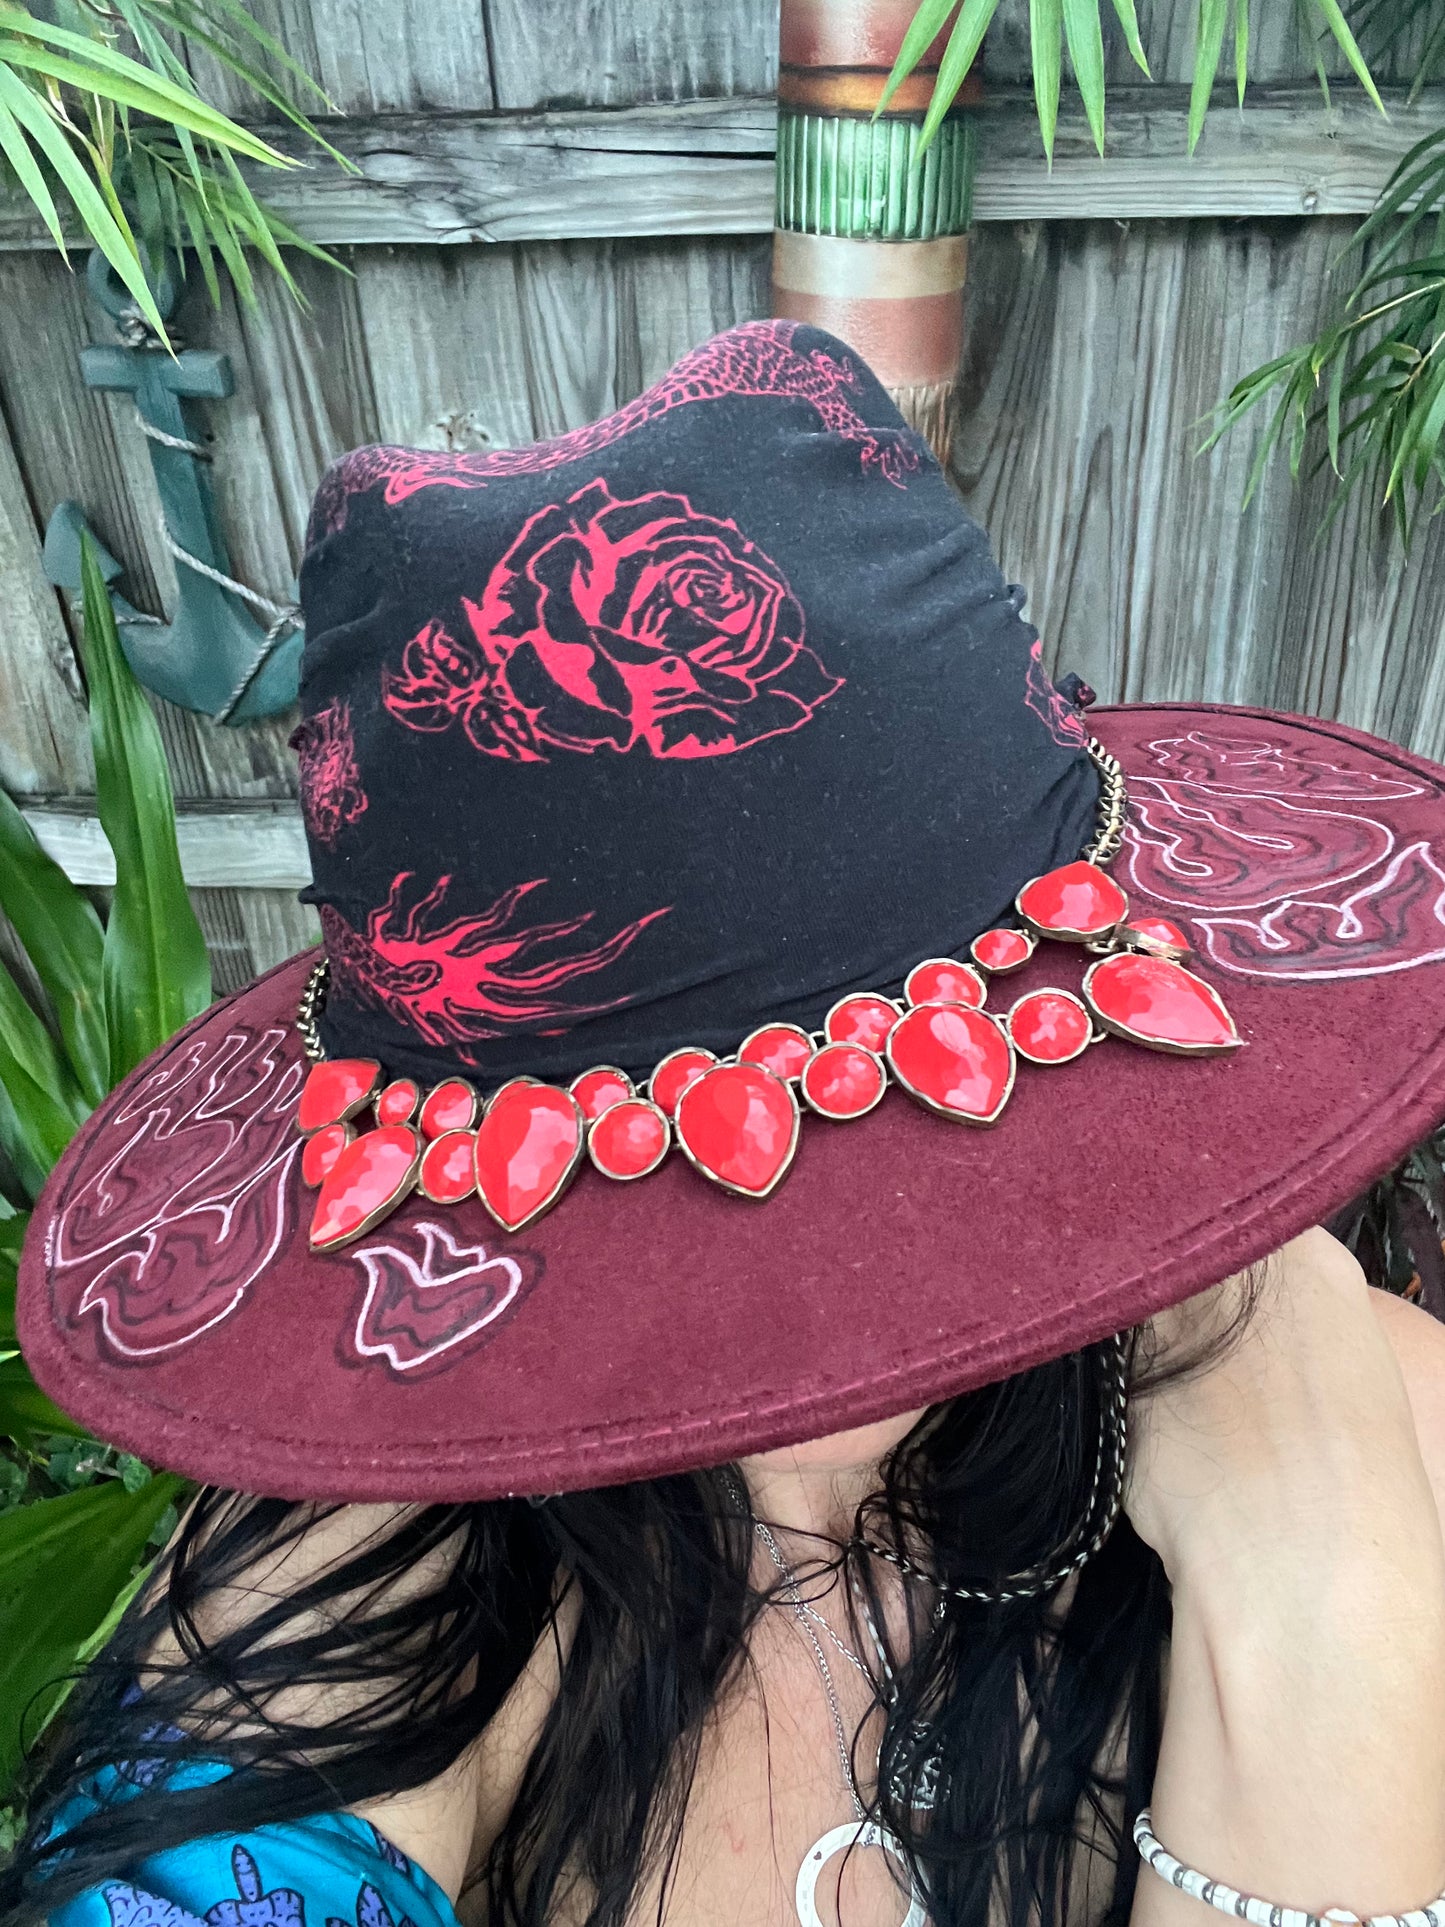 Red Dragon Hat